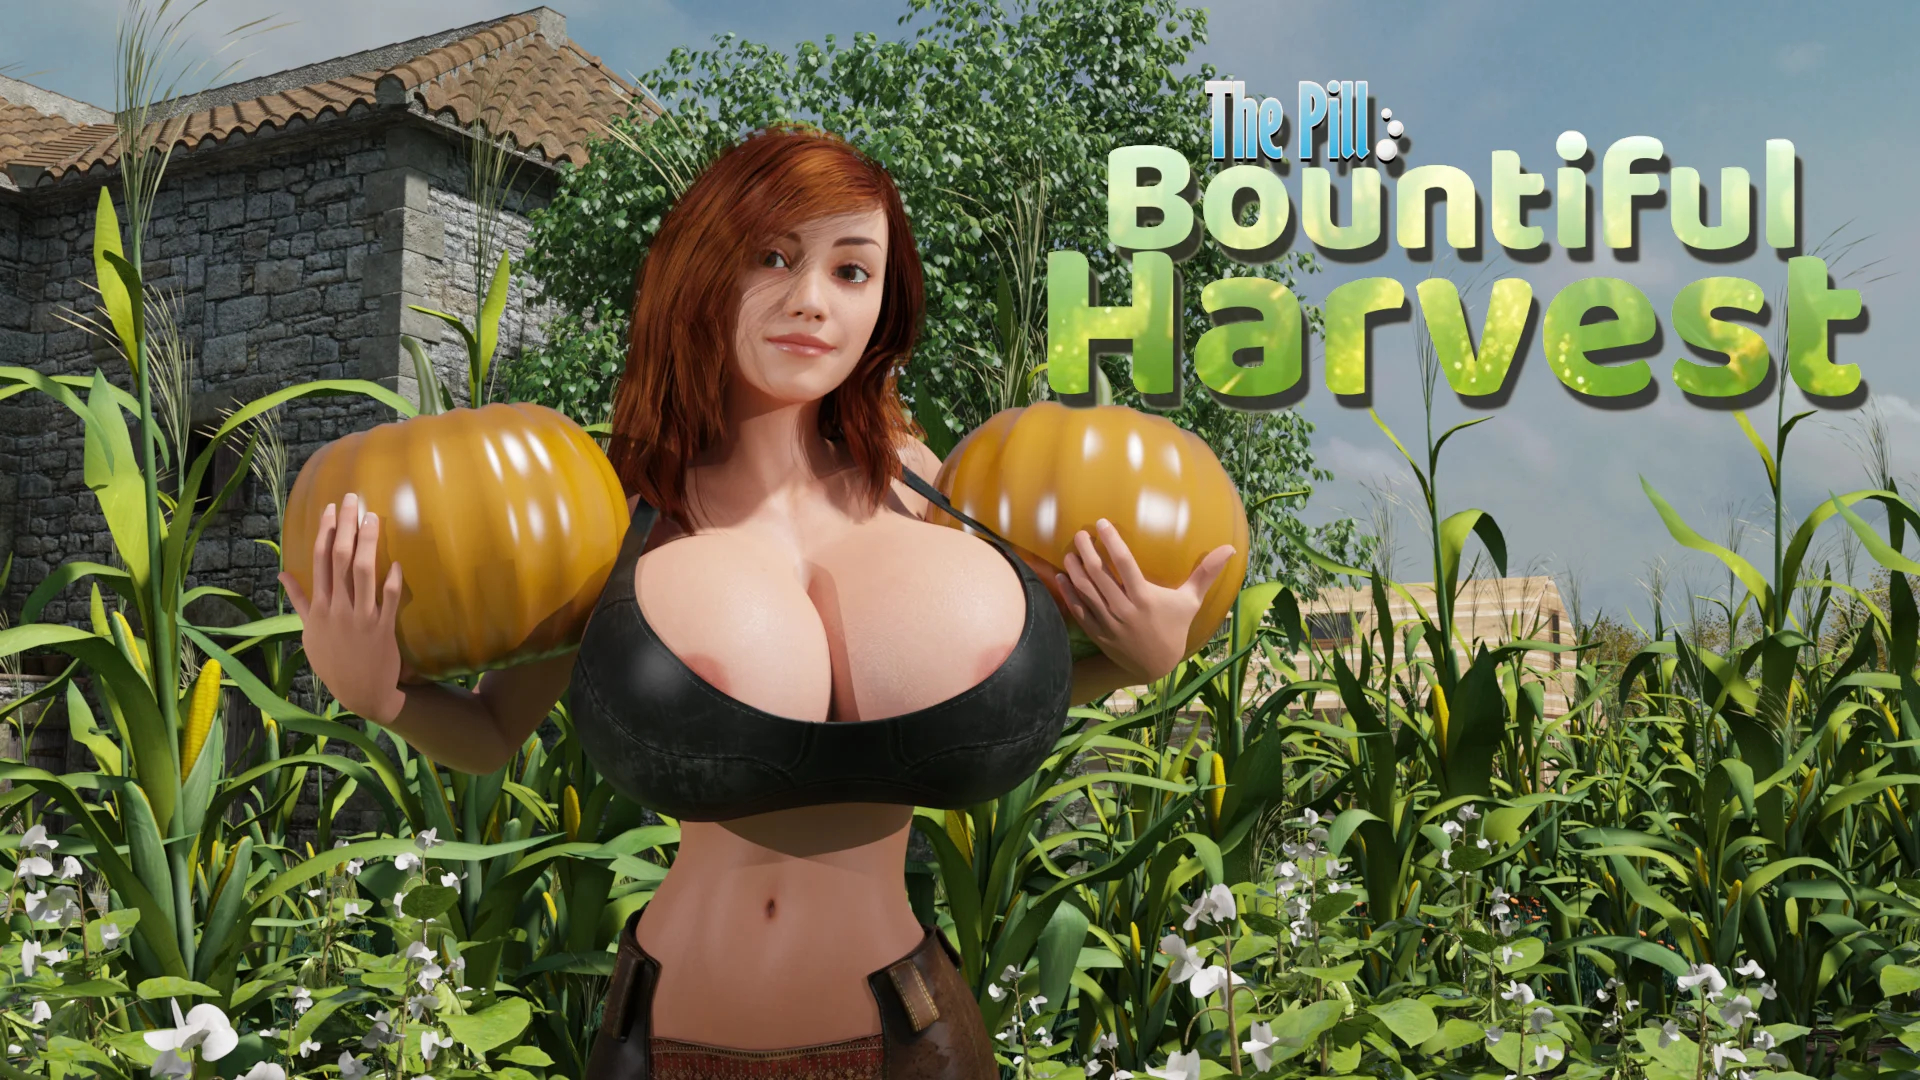 The Pill: Bountiful Harvest v.0.1